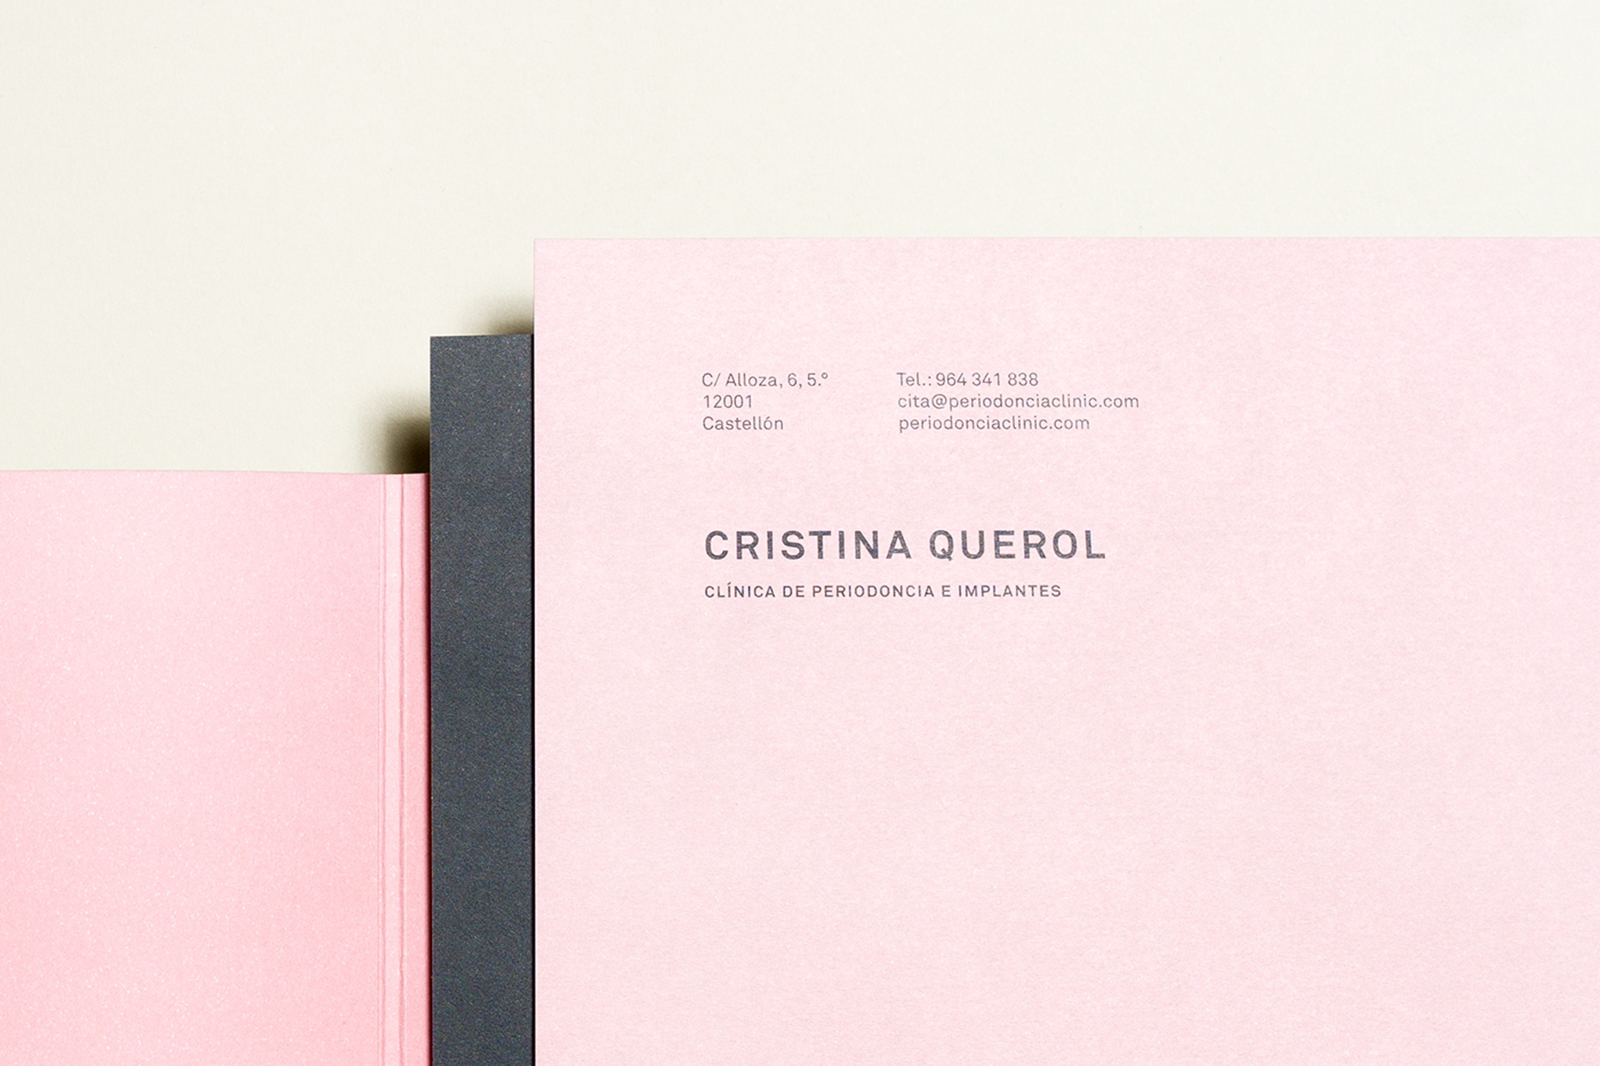 Cristina Querol克里斯蒂娜·奎尔牙科诊所品牌形象设计1